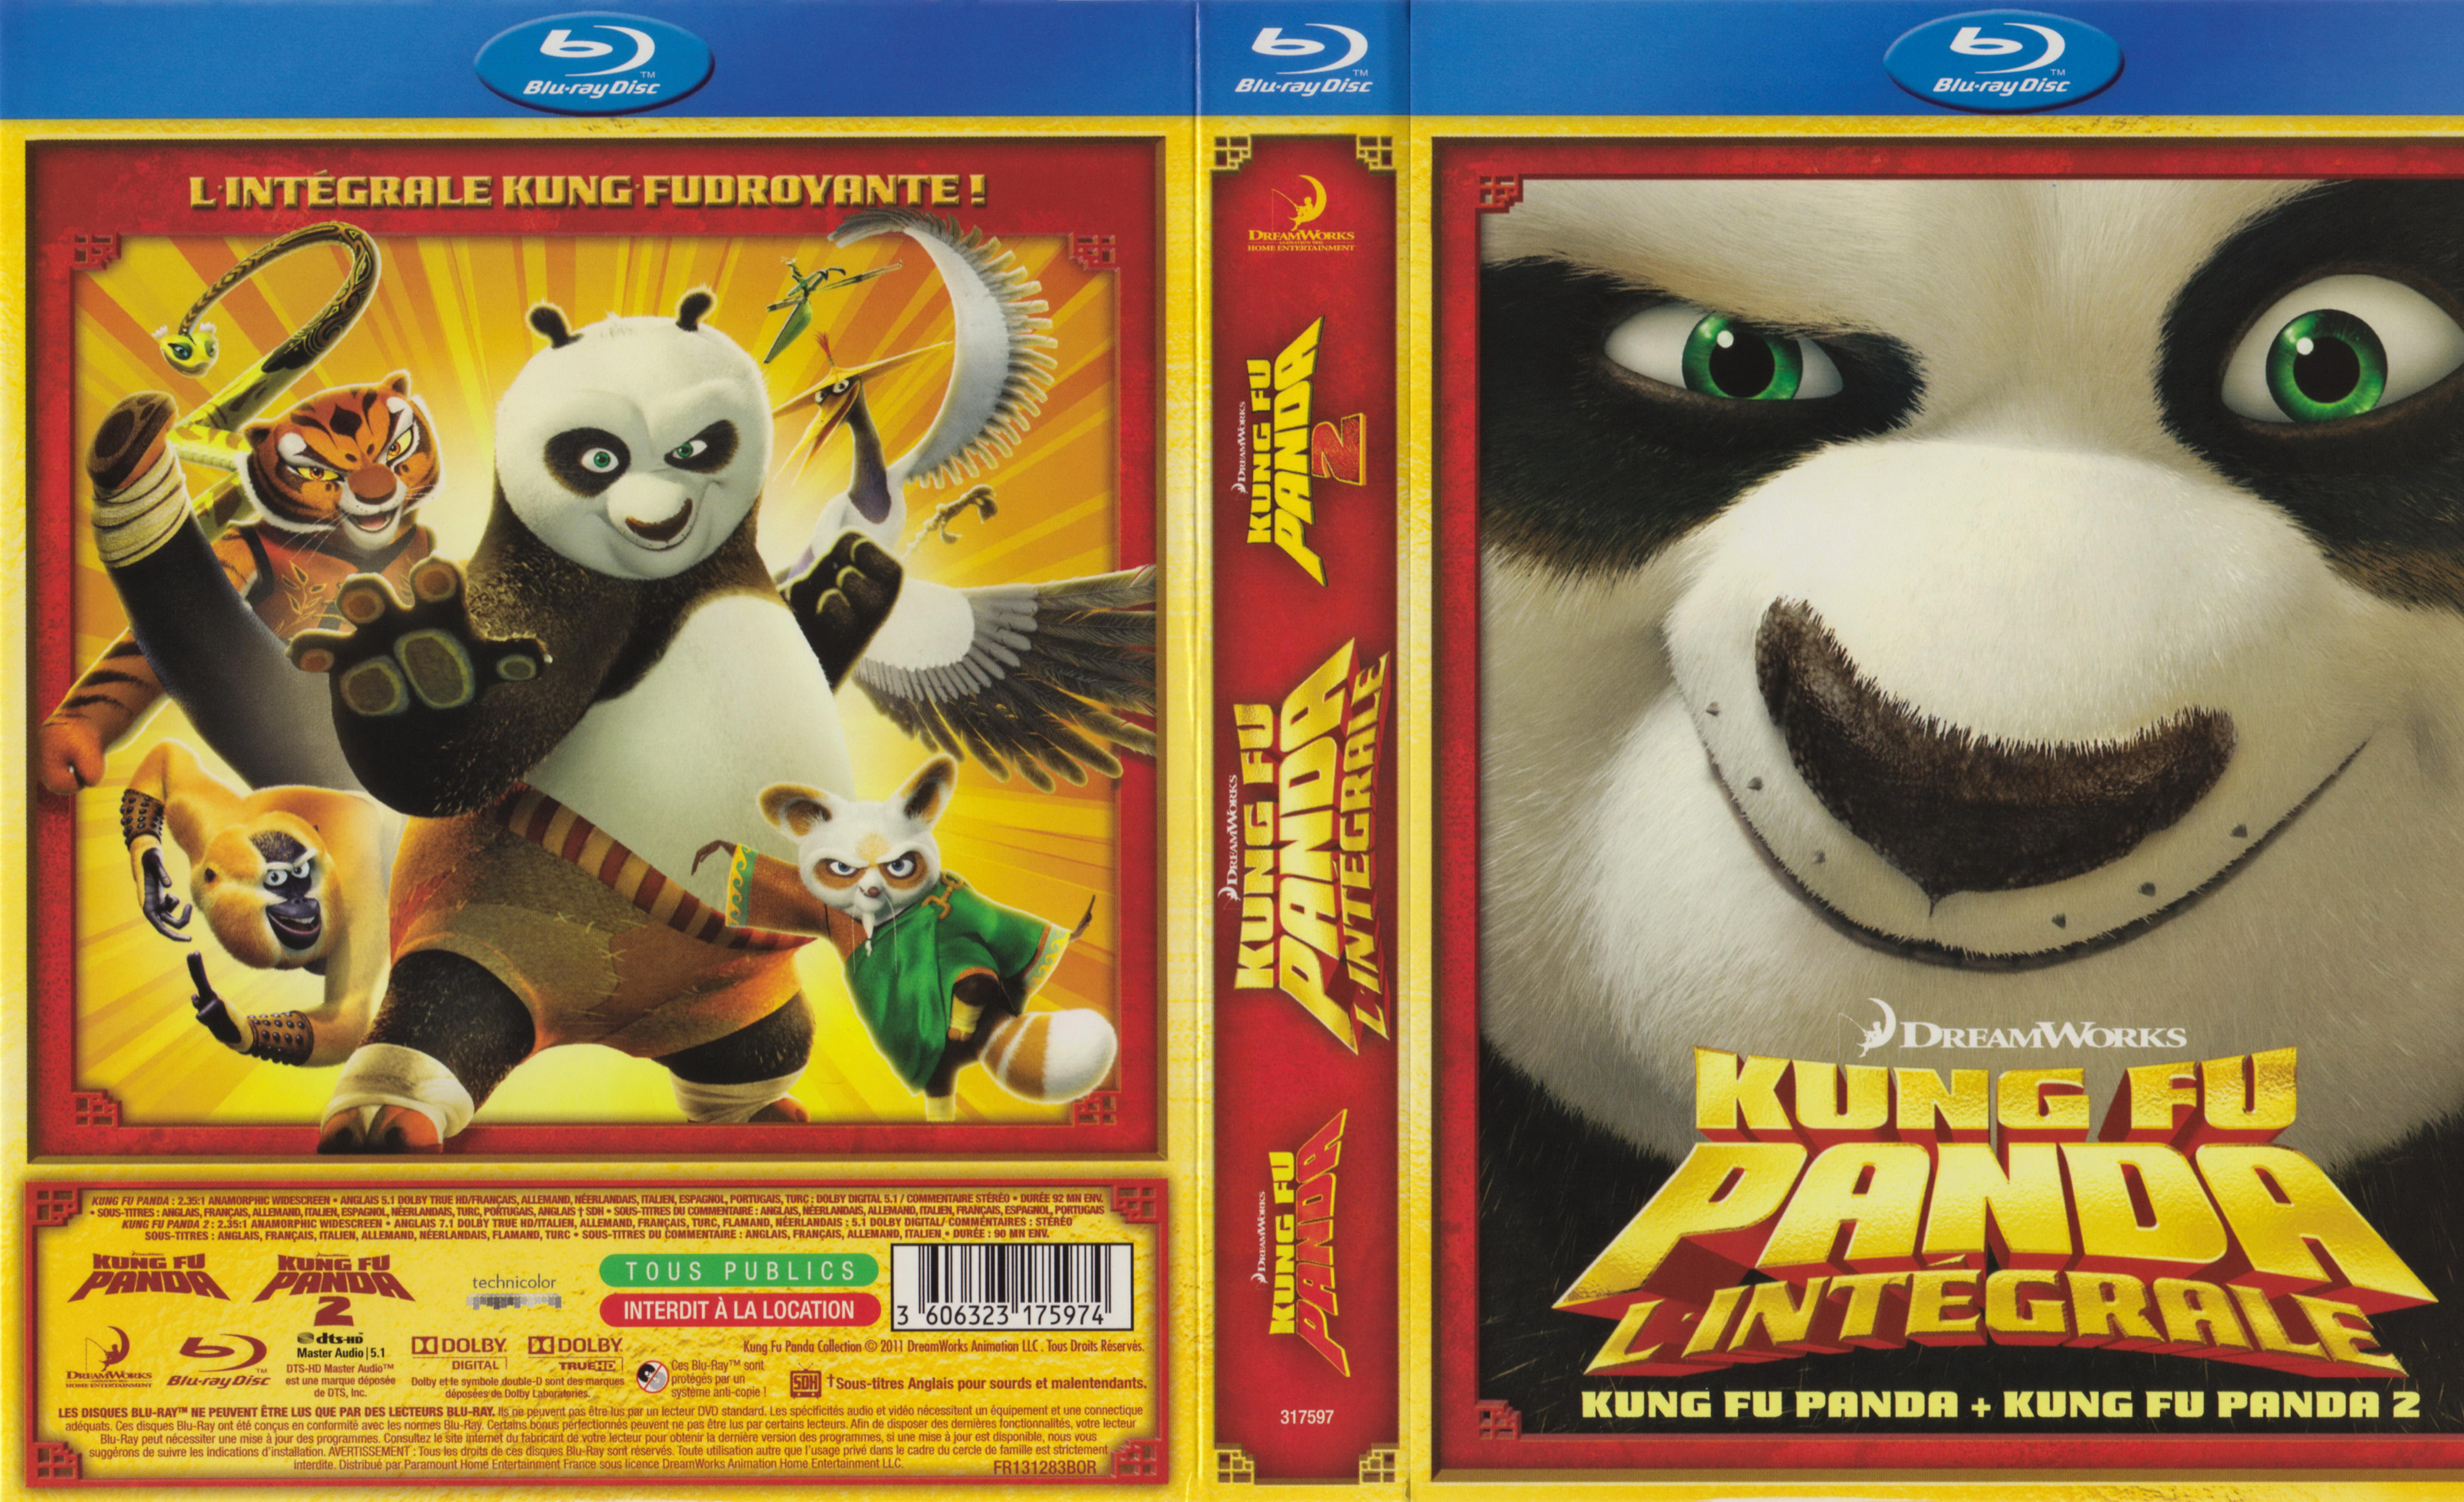 Jaquette DVD Kung fu panda 1 et 2 (BLU RAY)